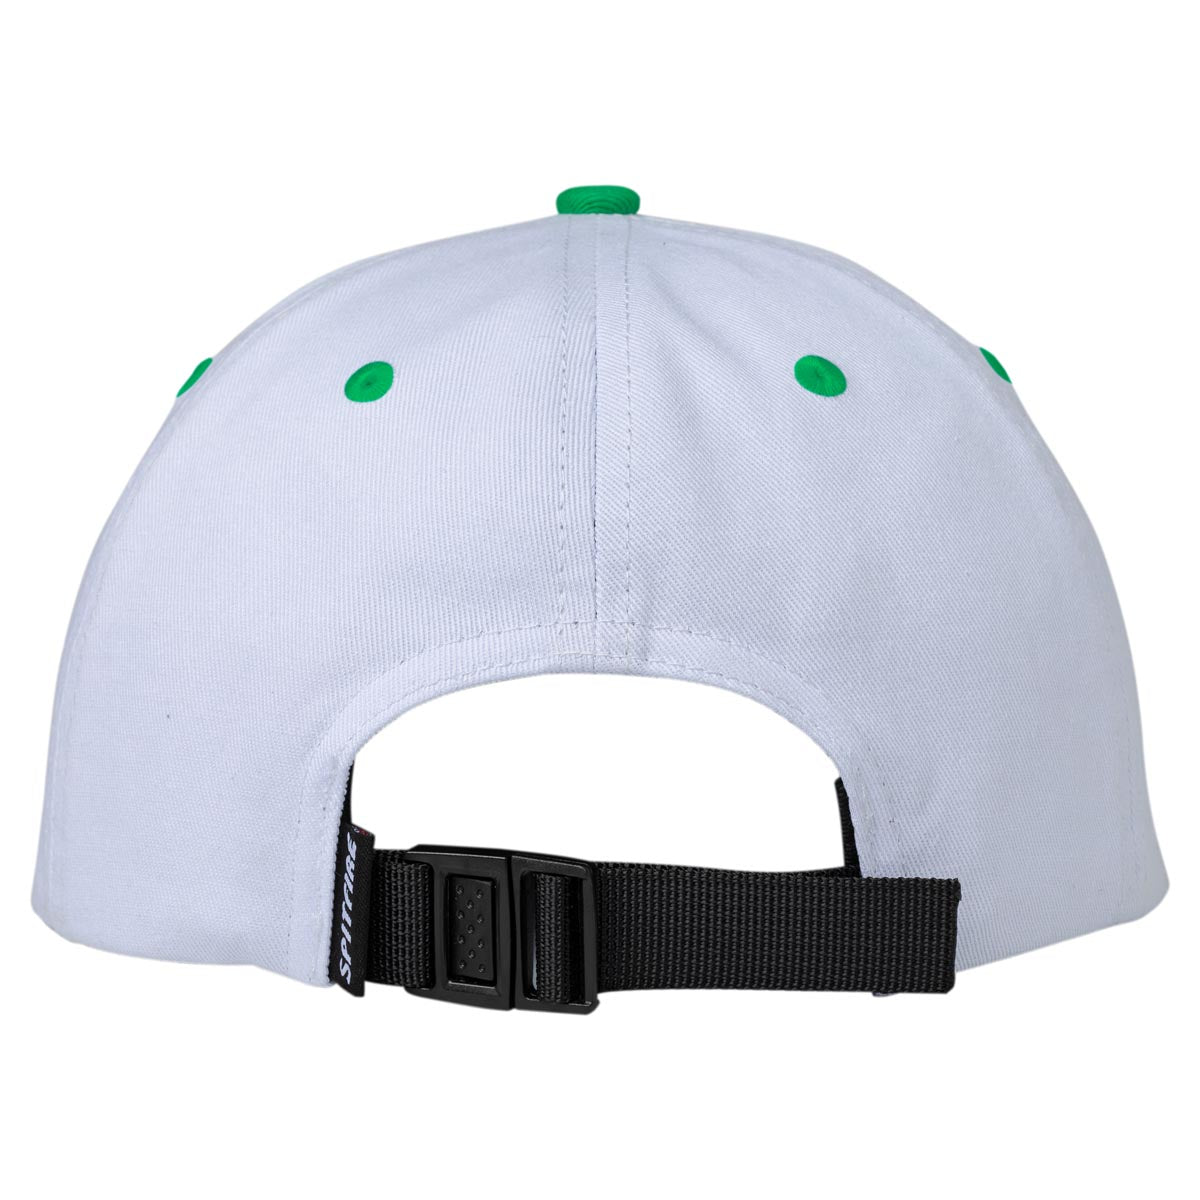 Spitfire Lil Bighead Strapback Hat - White/Green image 2